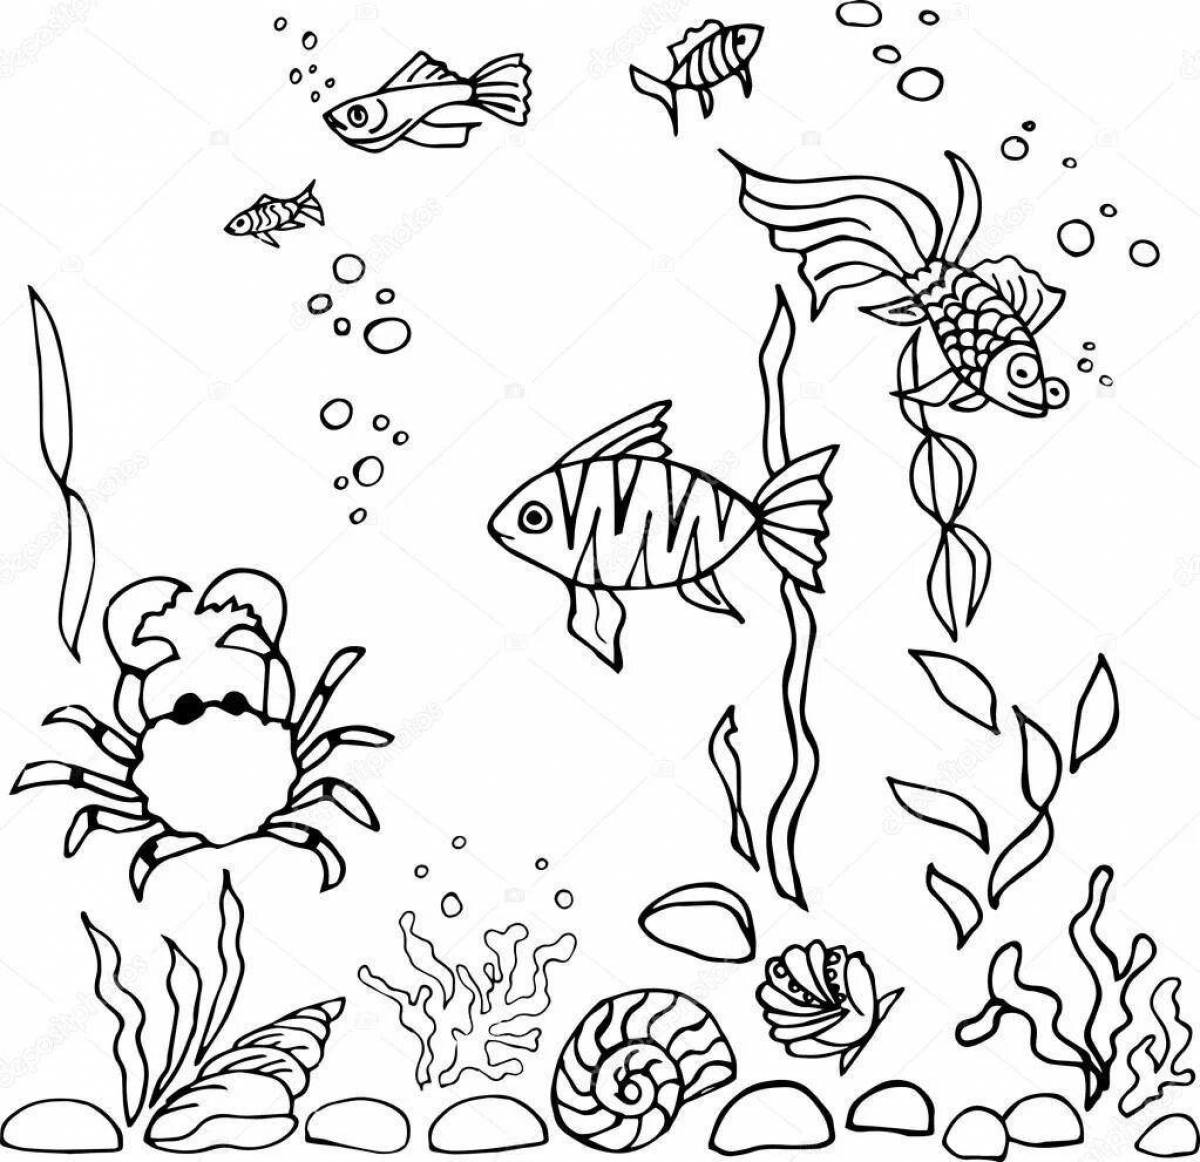 Coloring book dazzling fish with algae